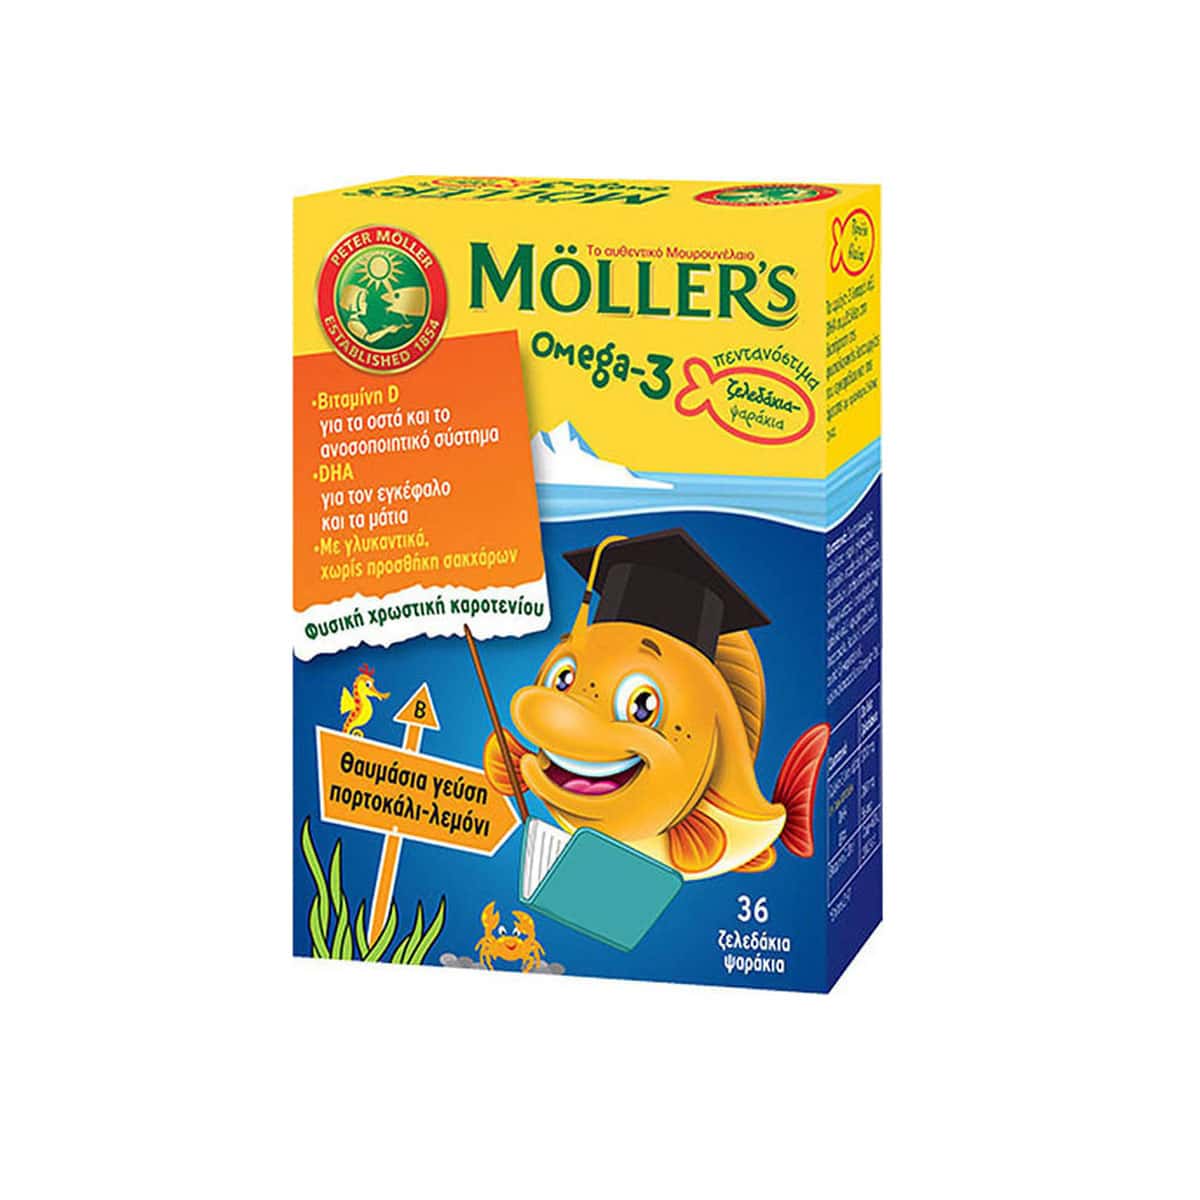 Mollers-Omega-3-gia-Paidia-36-zeledakia-psarakia-Portokali-Lemoni-7070866026264